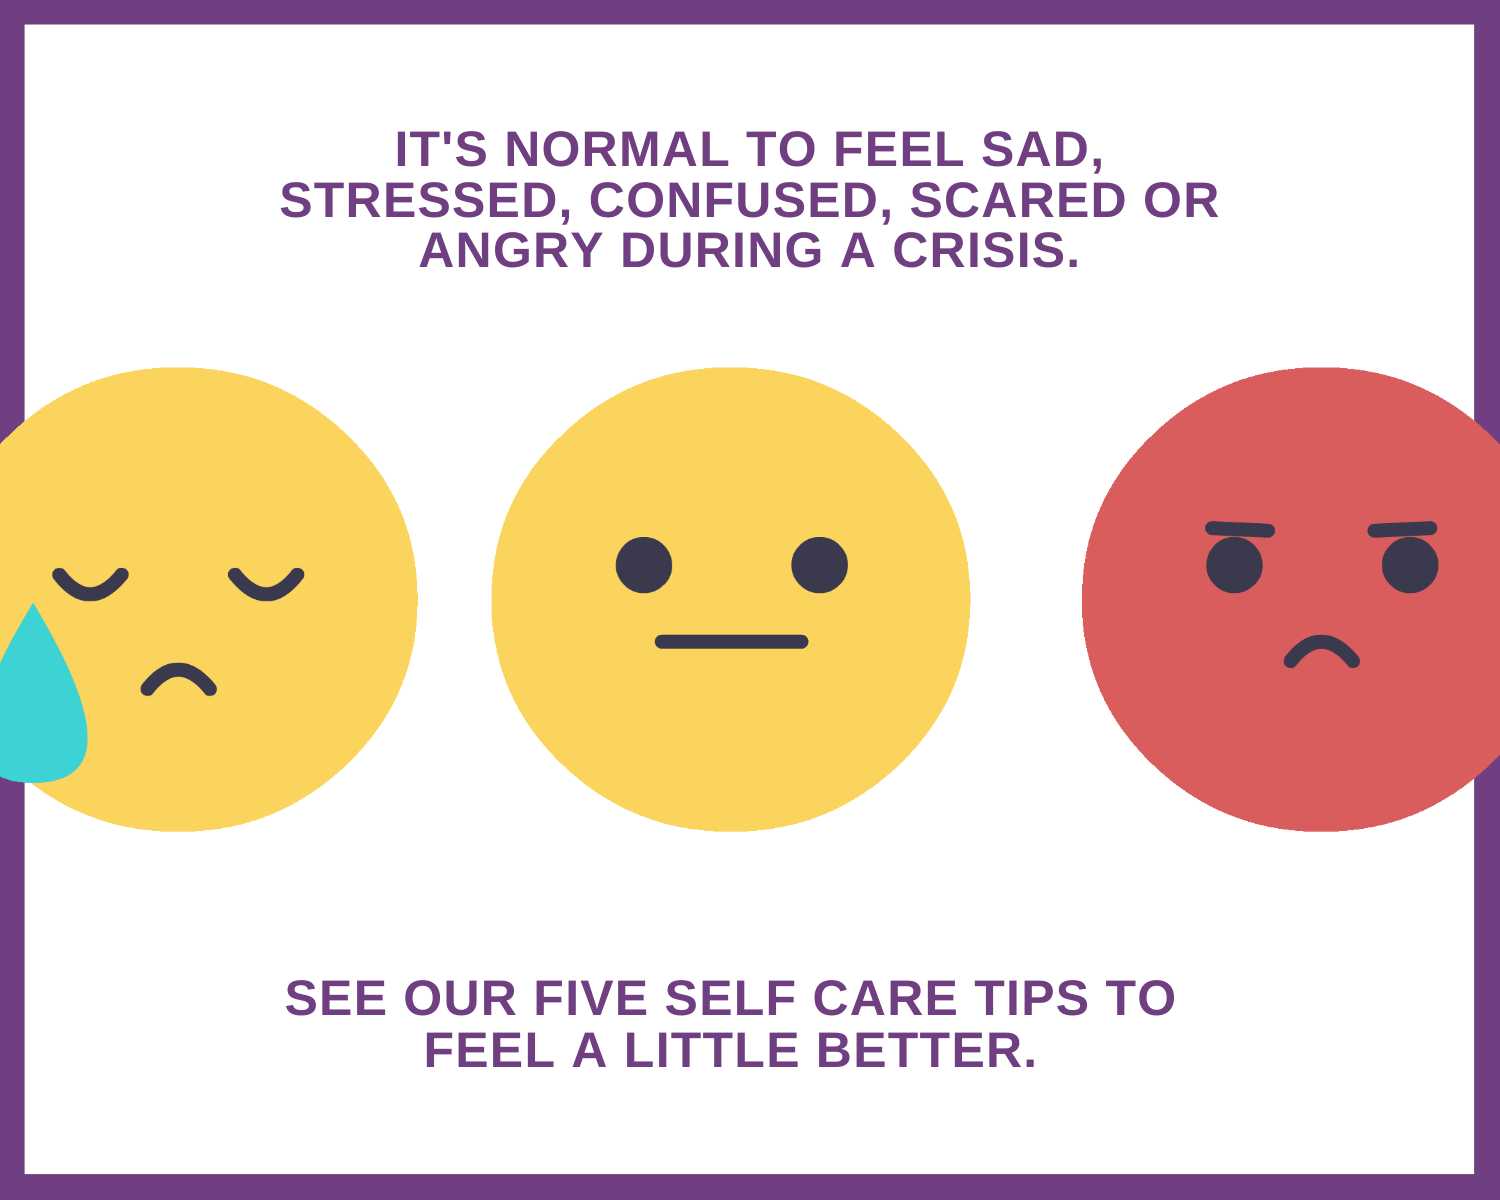 three emoji faces; one sad, one apathetic, one mad. "Five self care tips"